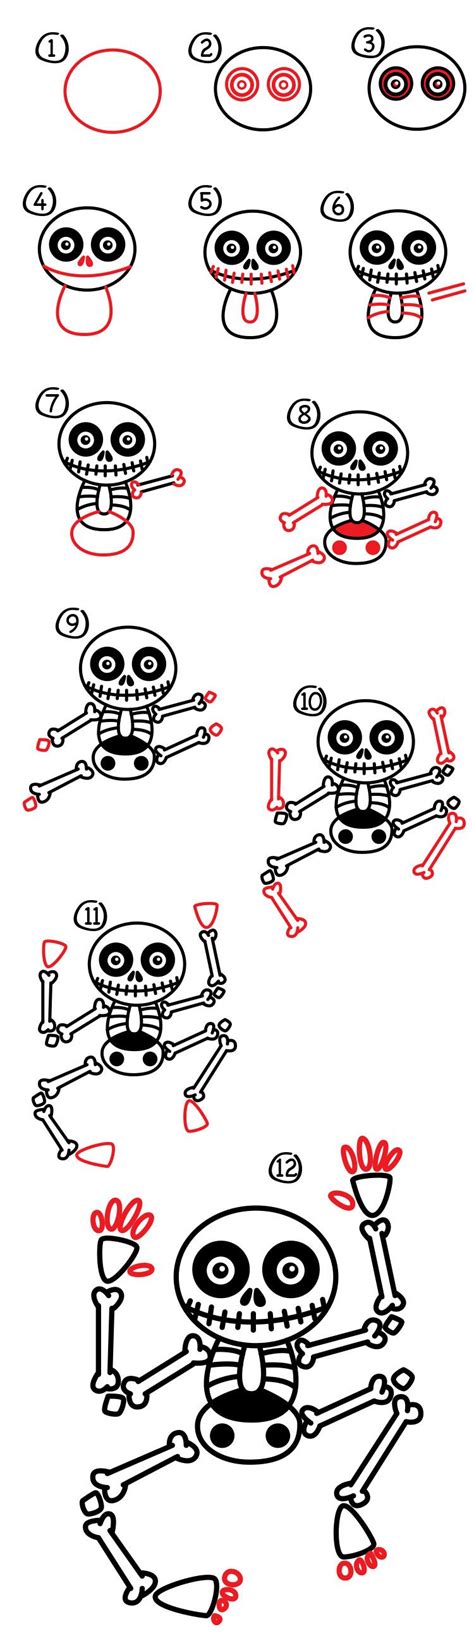 How To Draw A Skeleton Art For Kids Hub Dibujos Fáciles Dibujos